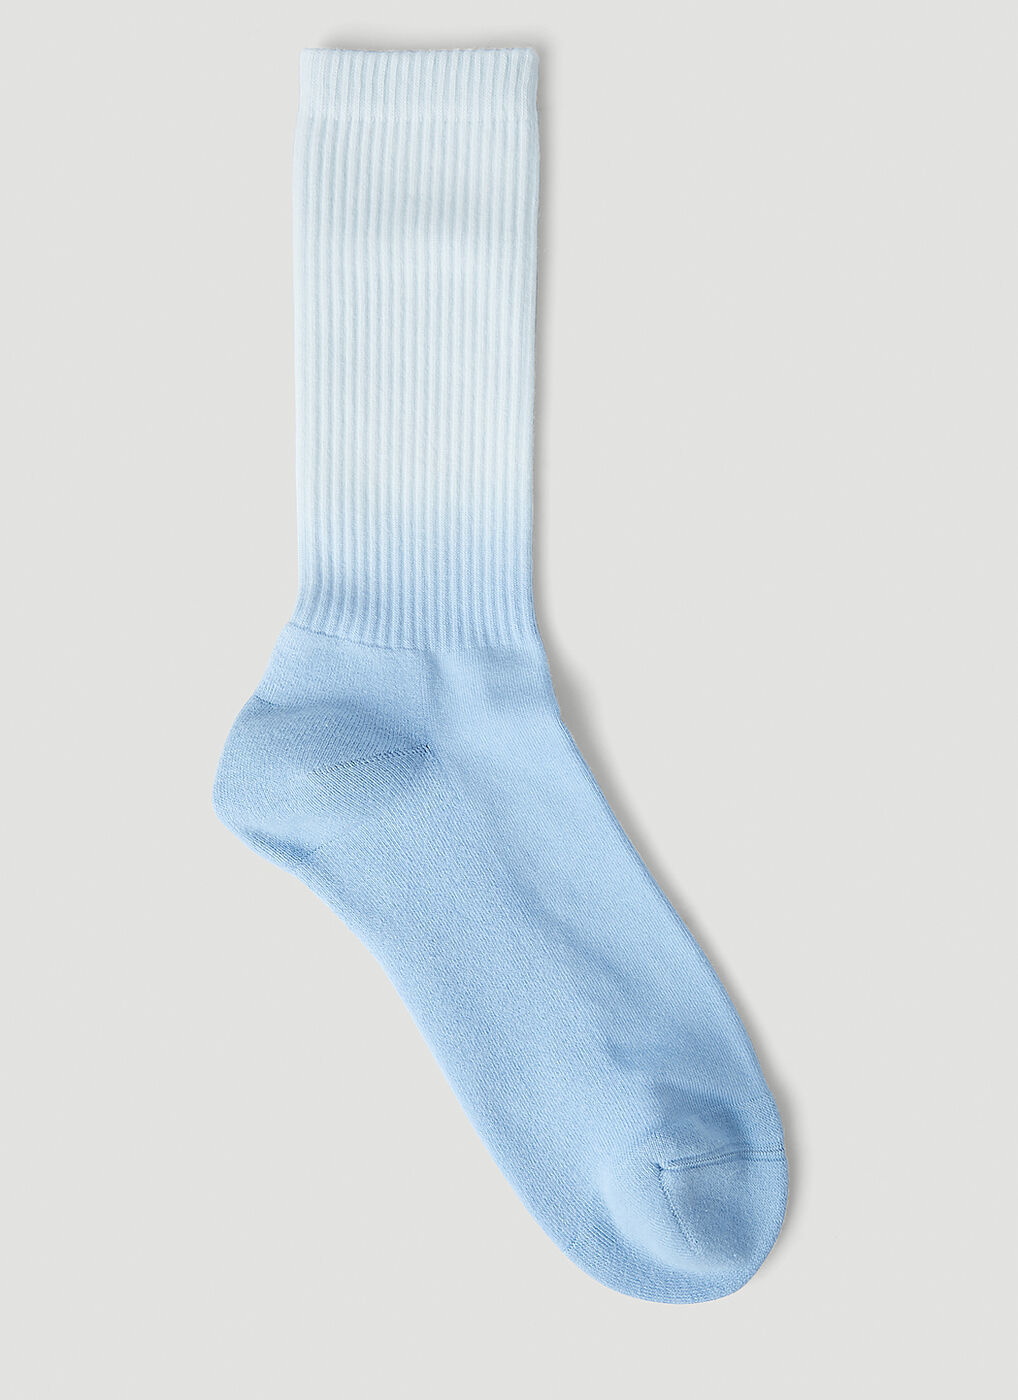 Les Chaussettes Moisson Socks in Light Blue Jacquemus